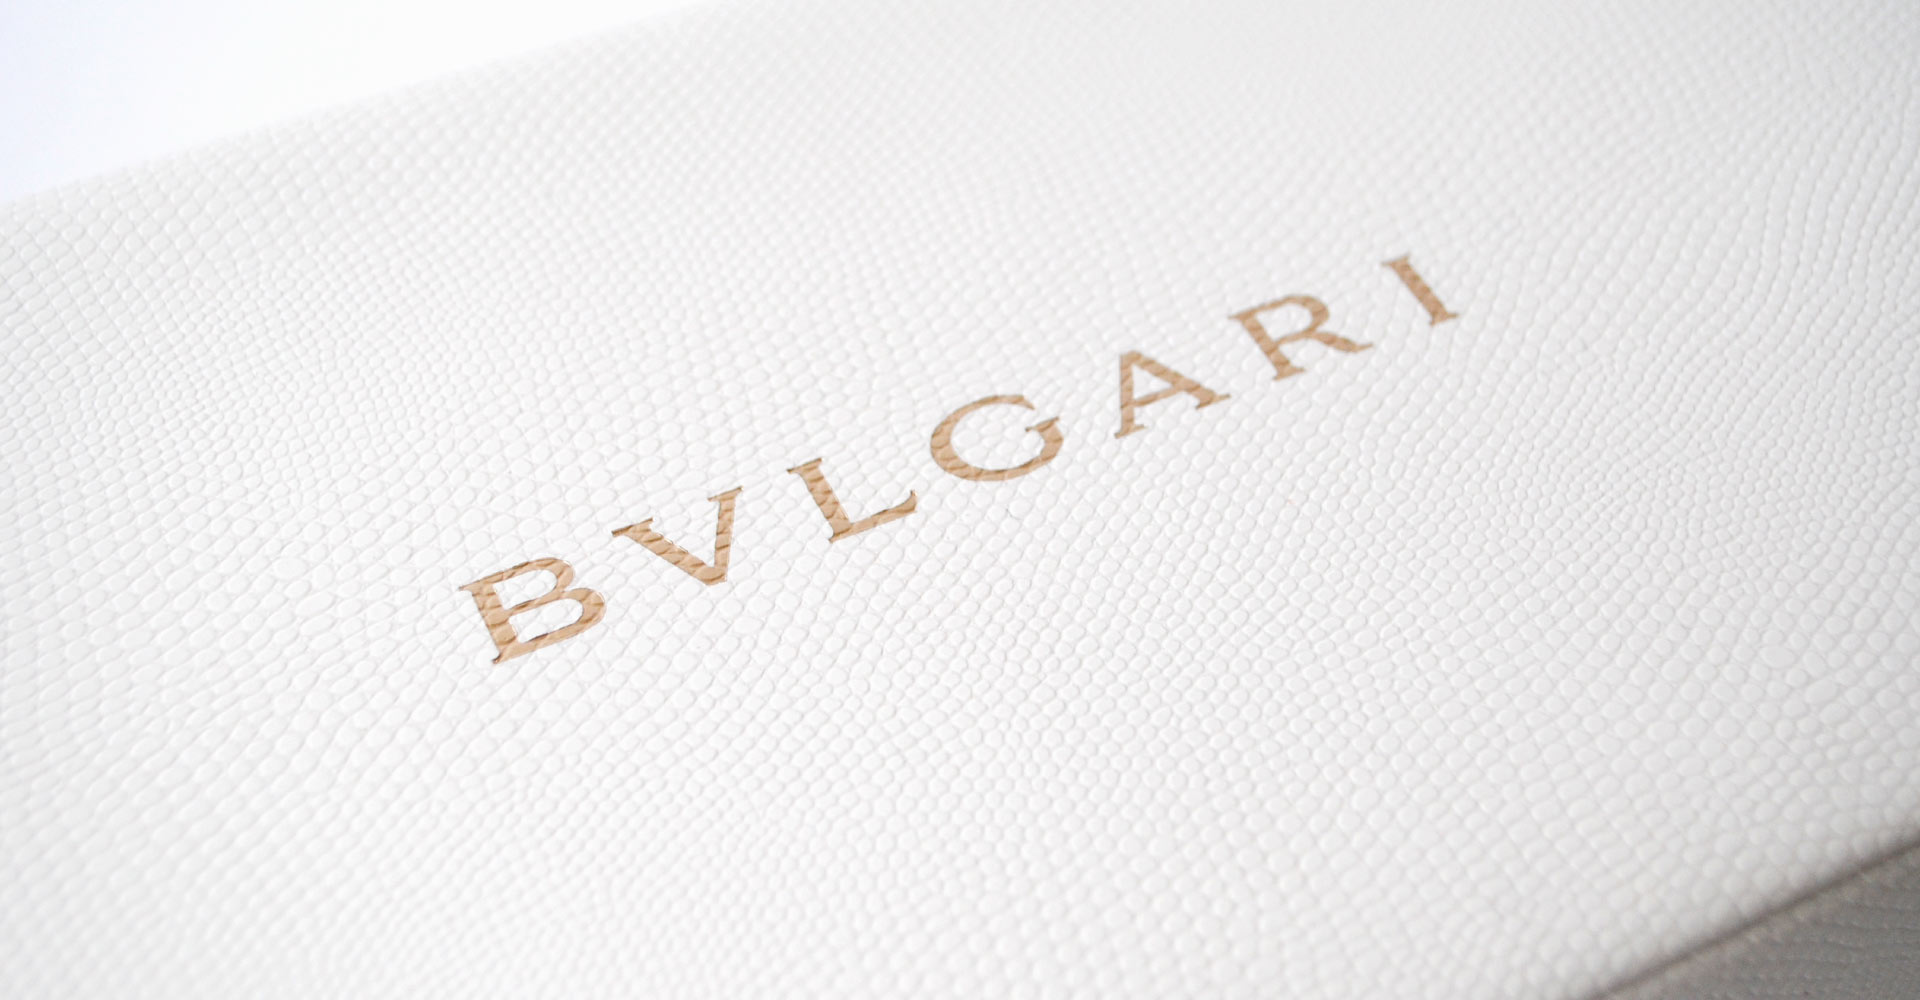 Bvlgari custom luxury packaging design made by Creative Retail Packaging in a detailed display